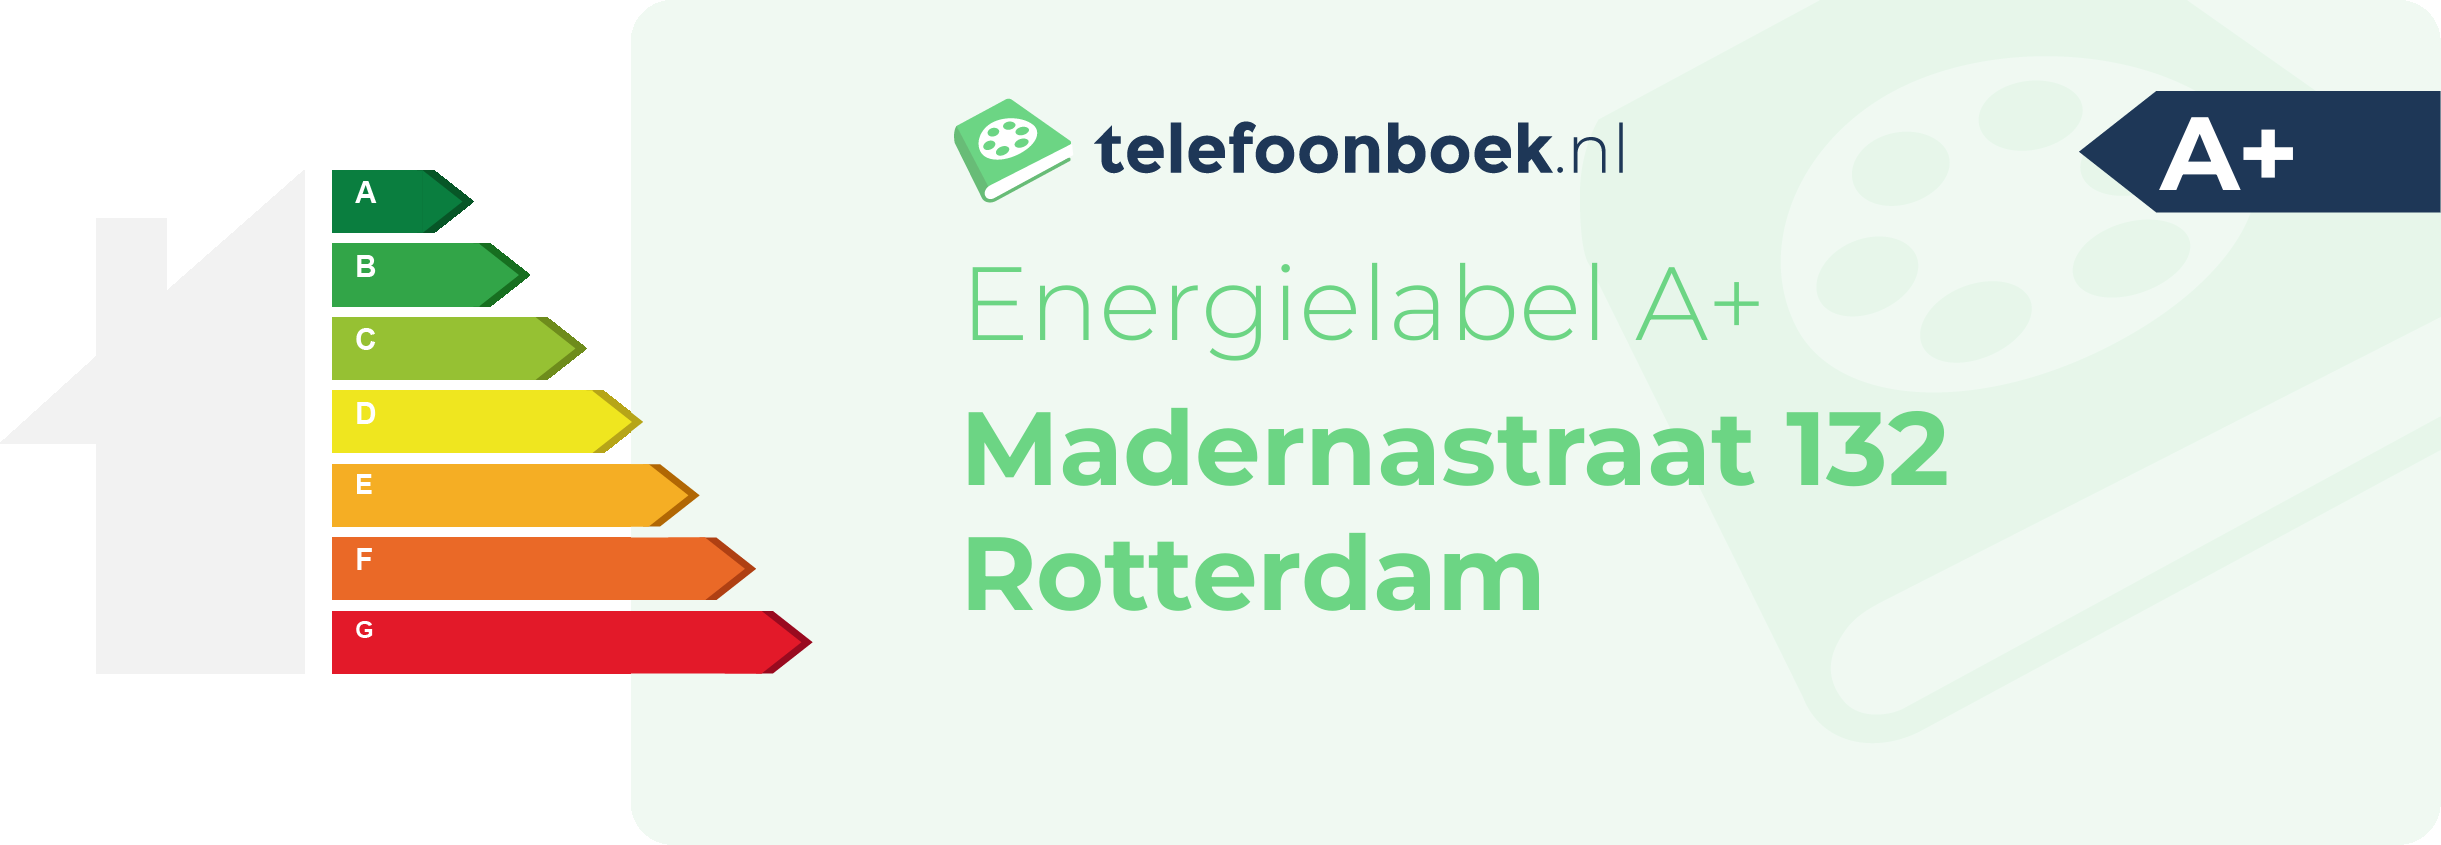 Energielabel Madernastraat 132 Rotterdam